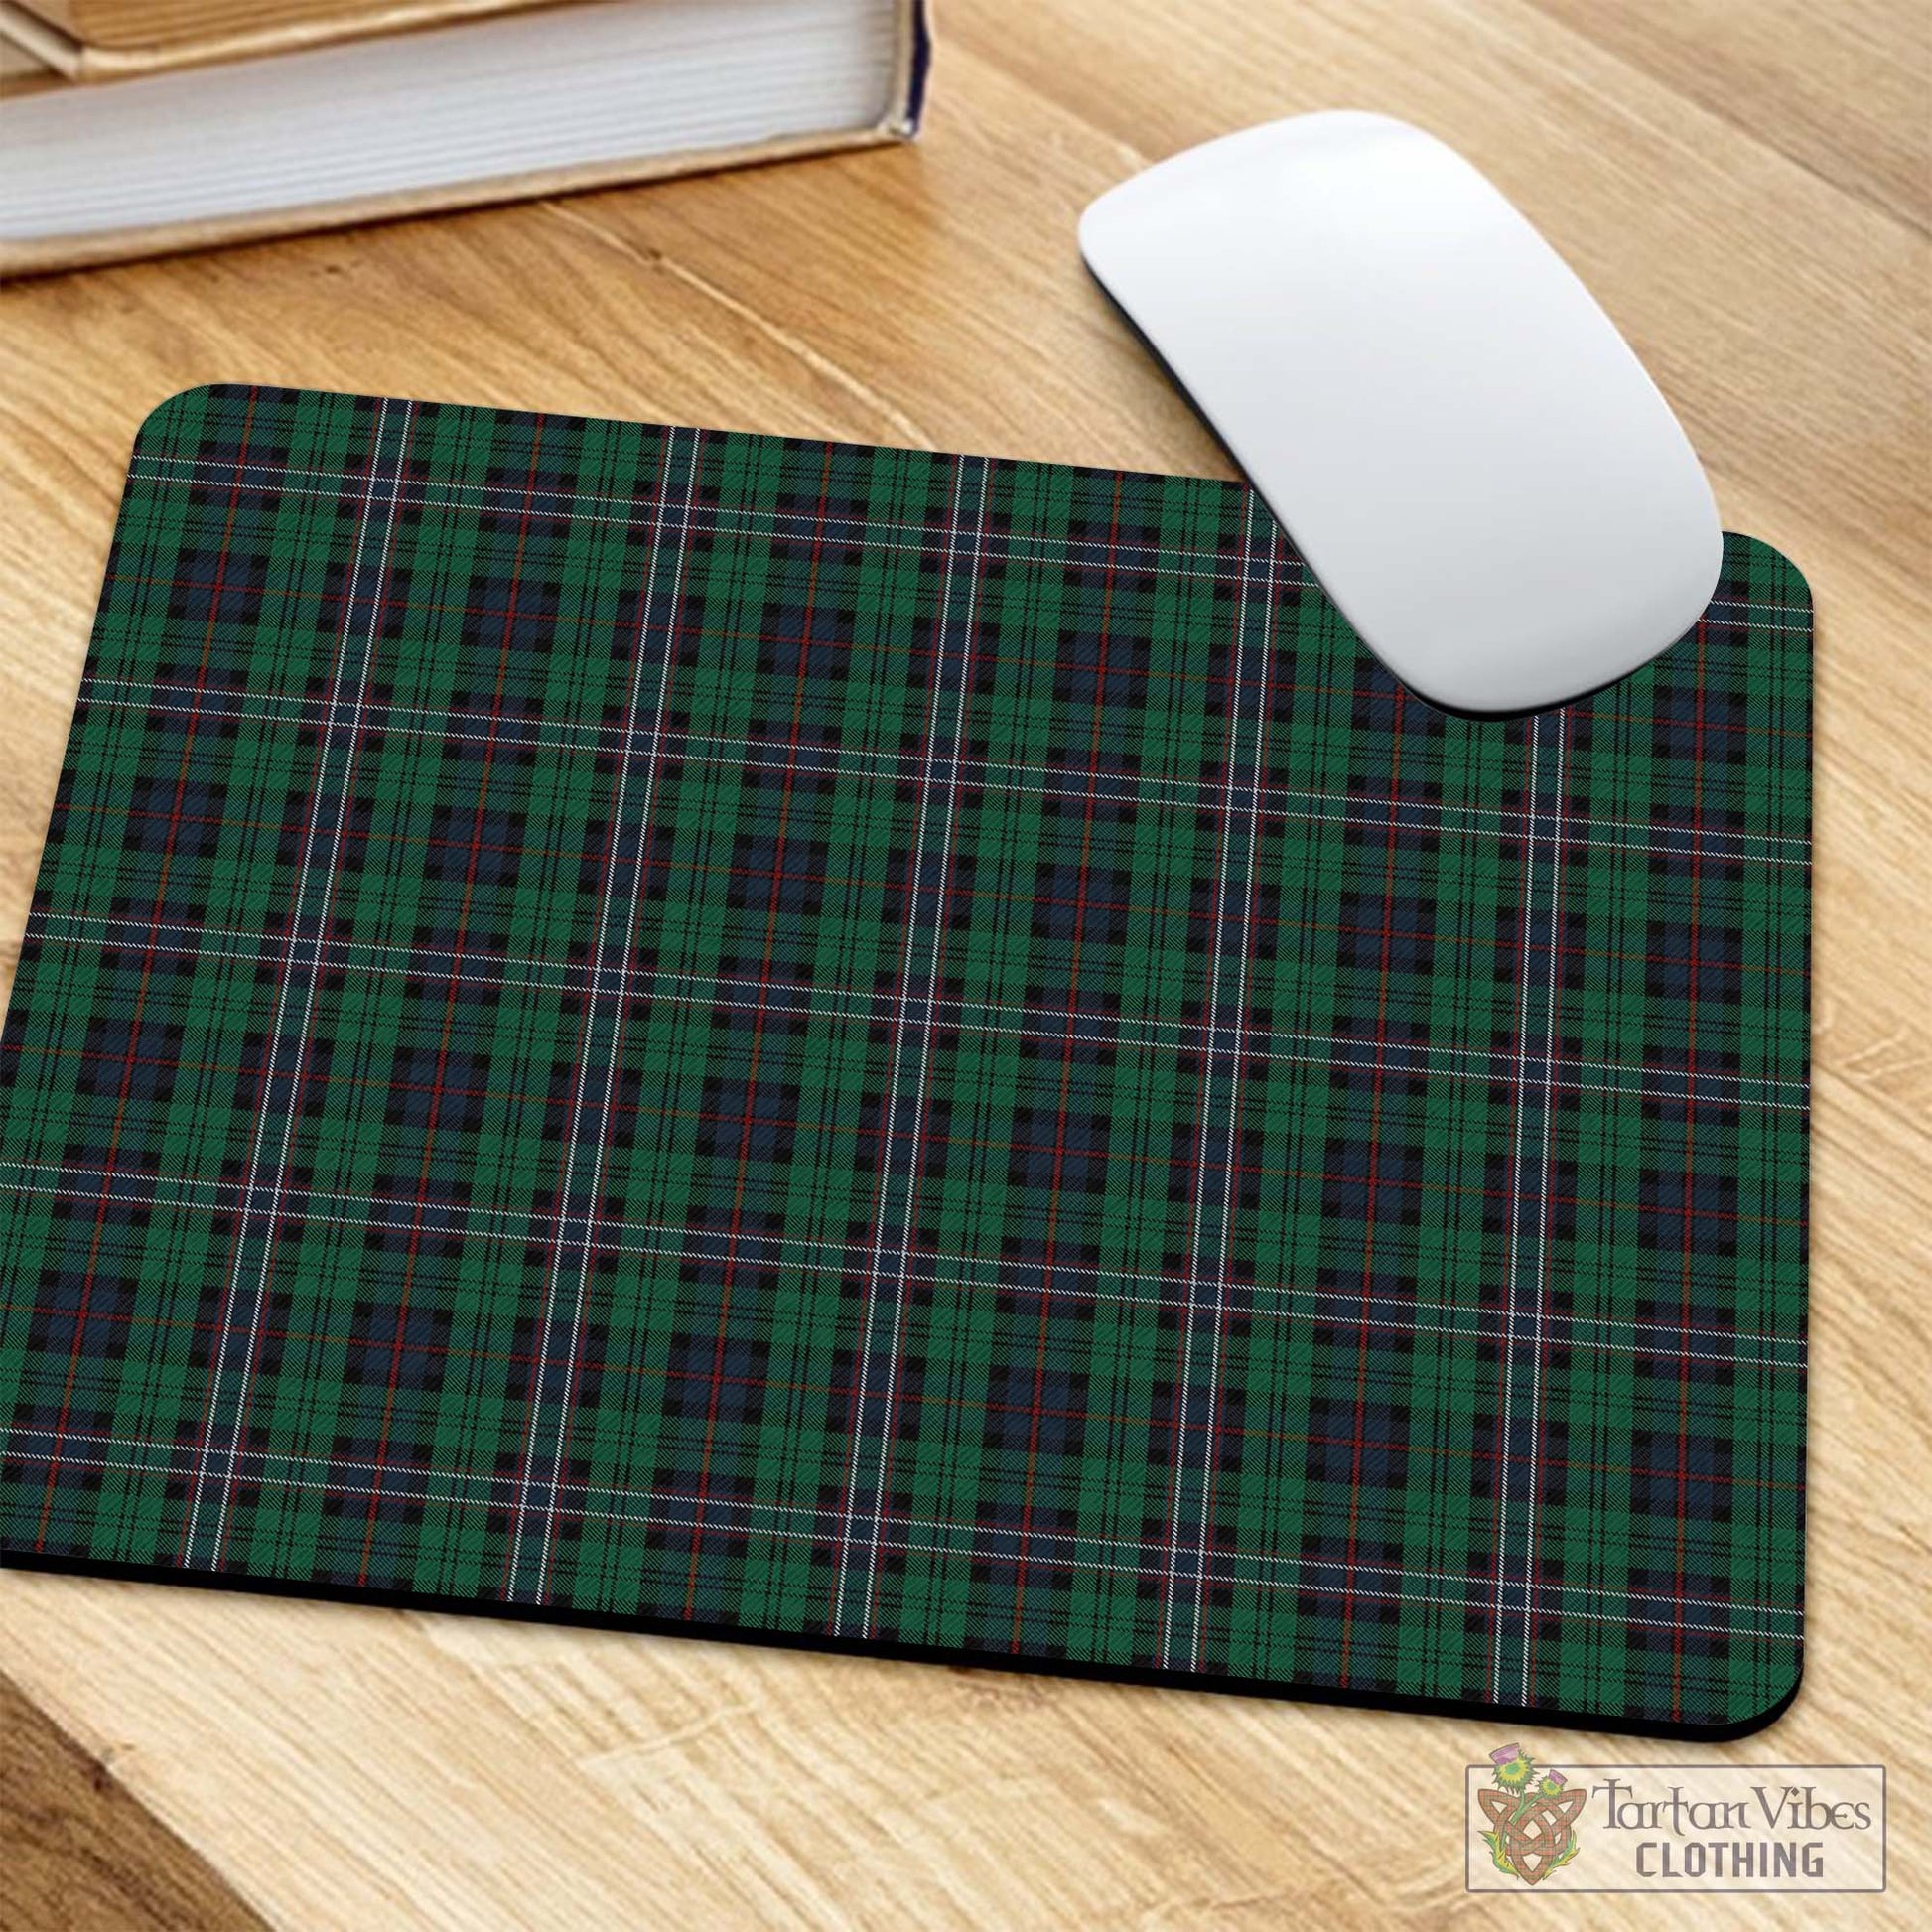 Tartan Vibes Clothing Scotland National Tartan Mouse Pad